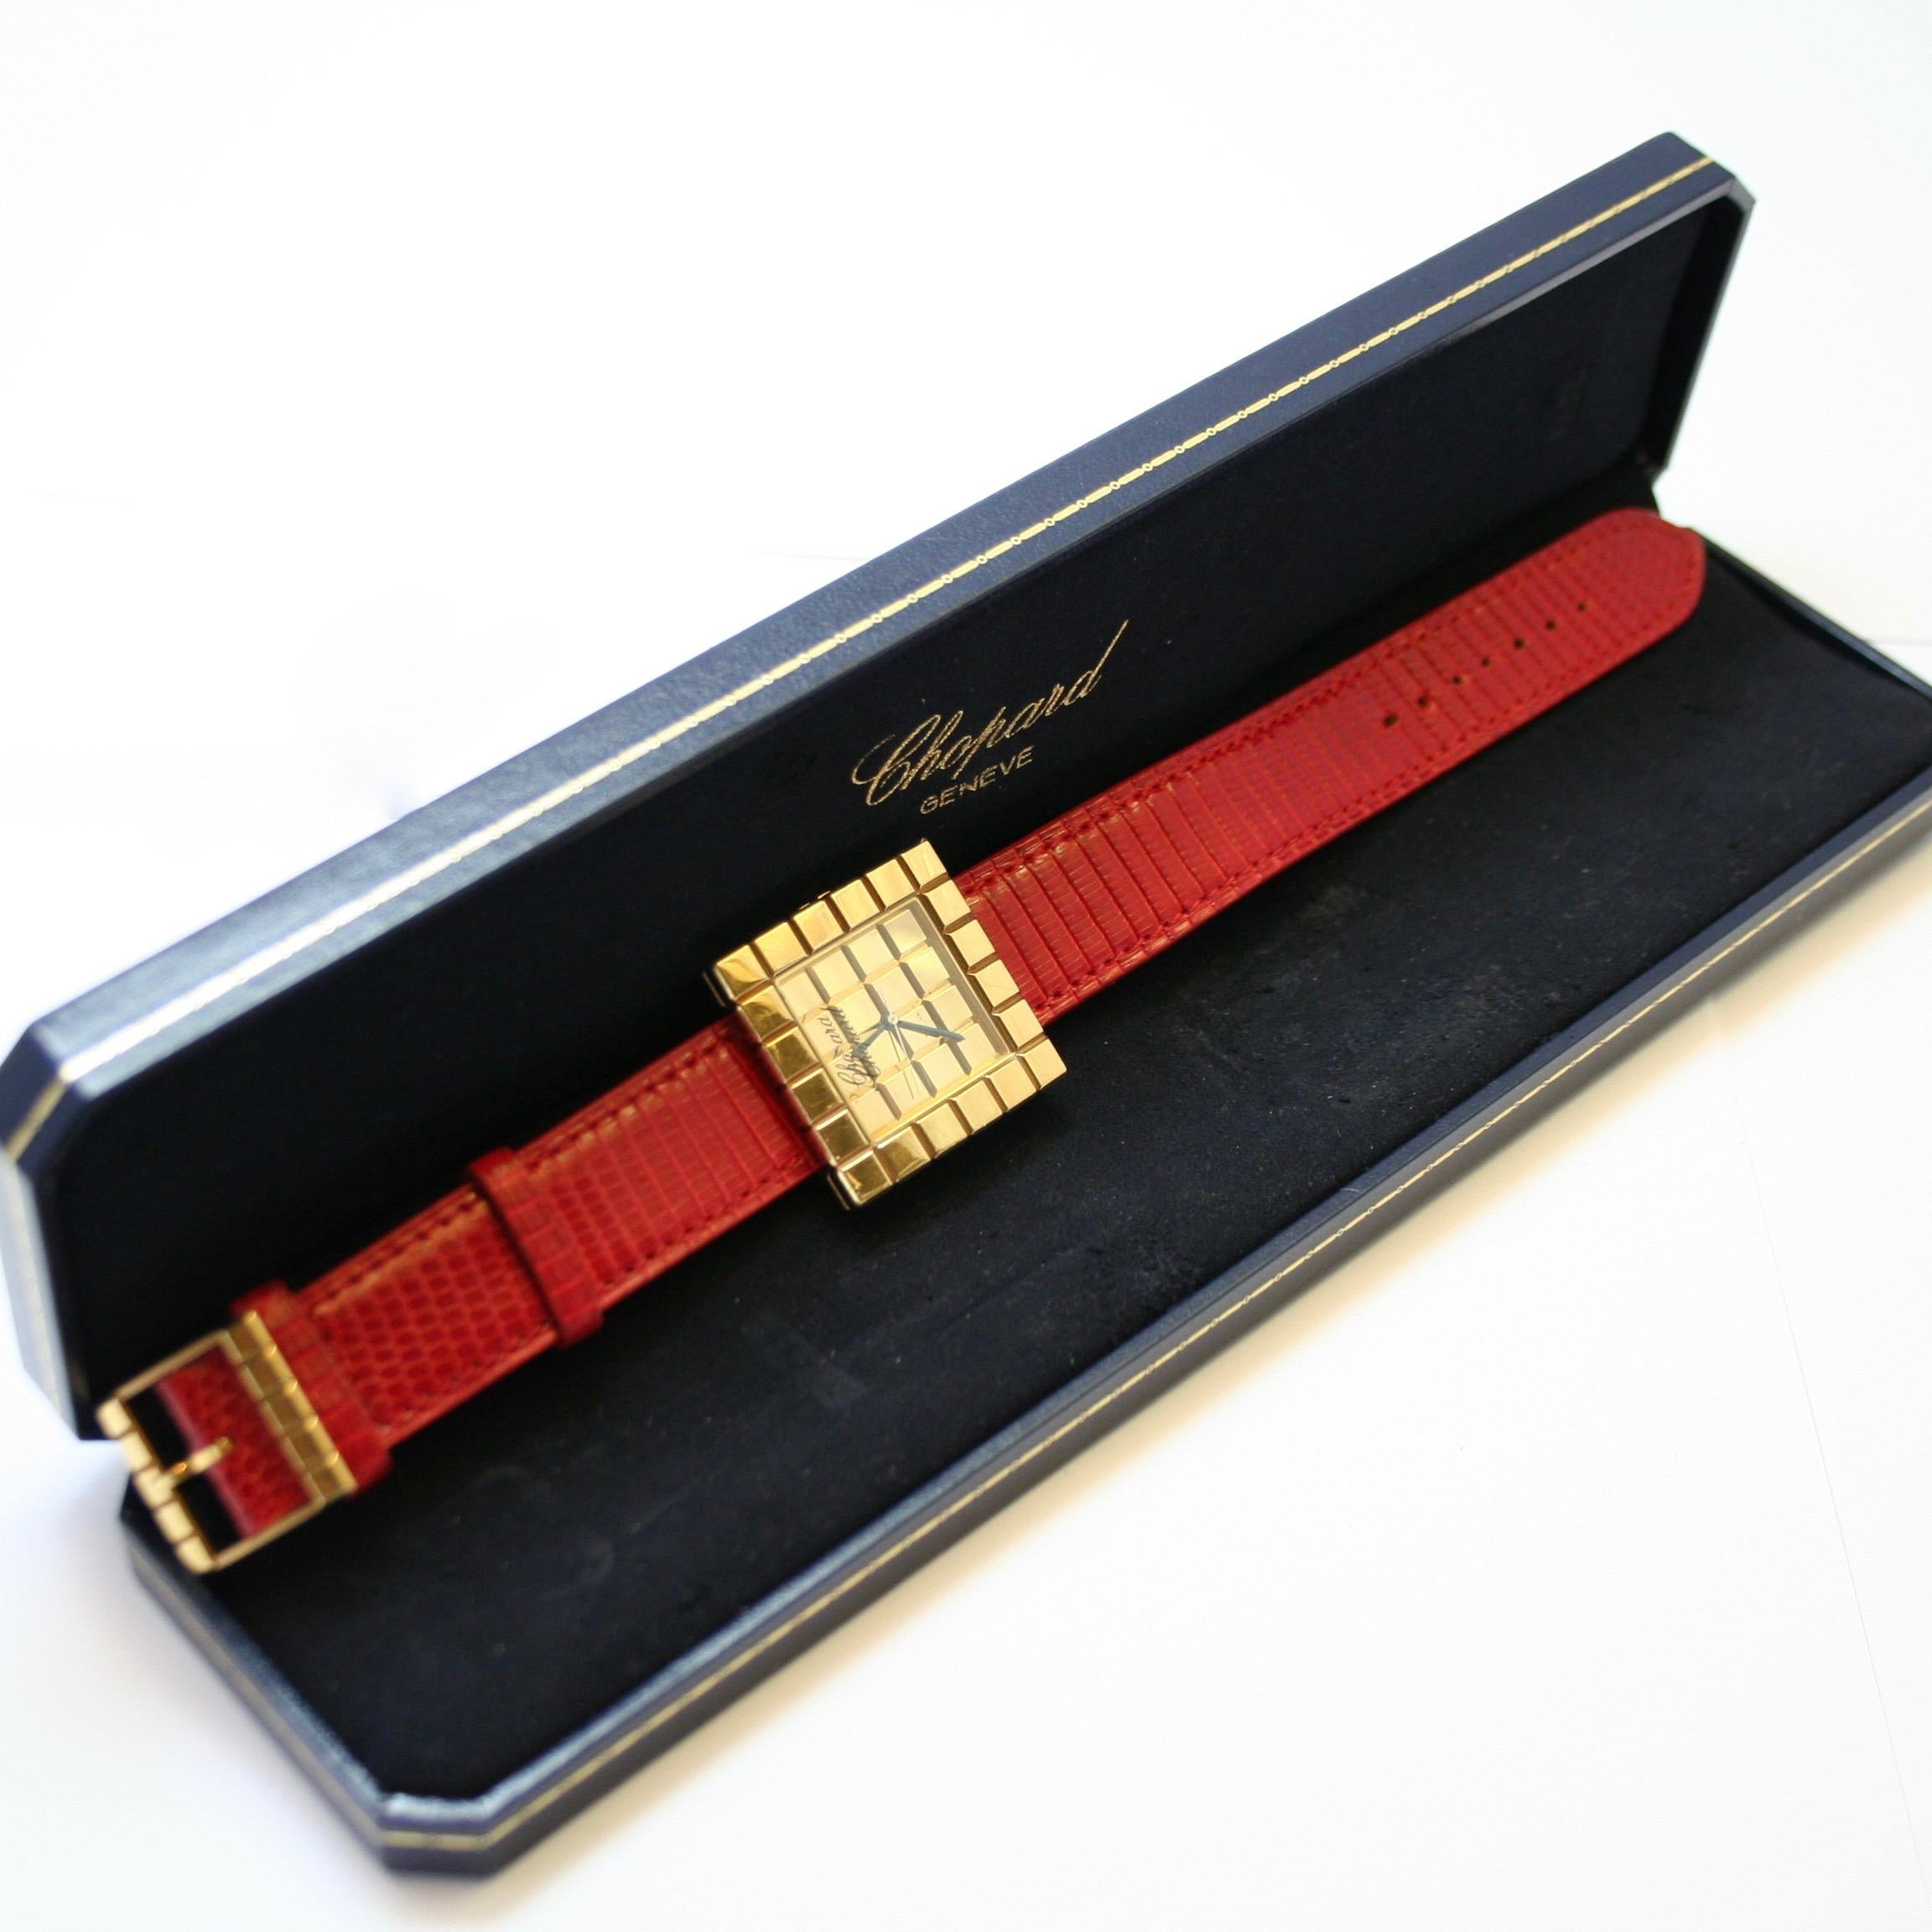 CHOPARD Watch, model ICE CUBE (30 mm) in rose gold, red croci bracelet. 
Quartz mouvement. 
Case dimension : 3 x 3 cm. 
Bracelet width : 1,9 cm. 
wrist size : approx. from 16,5 to 20,5 cm 
Ref : 7424/8 - 860098. 